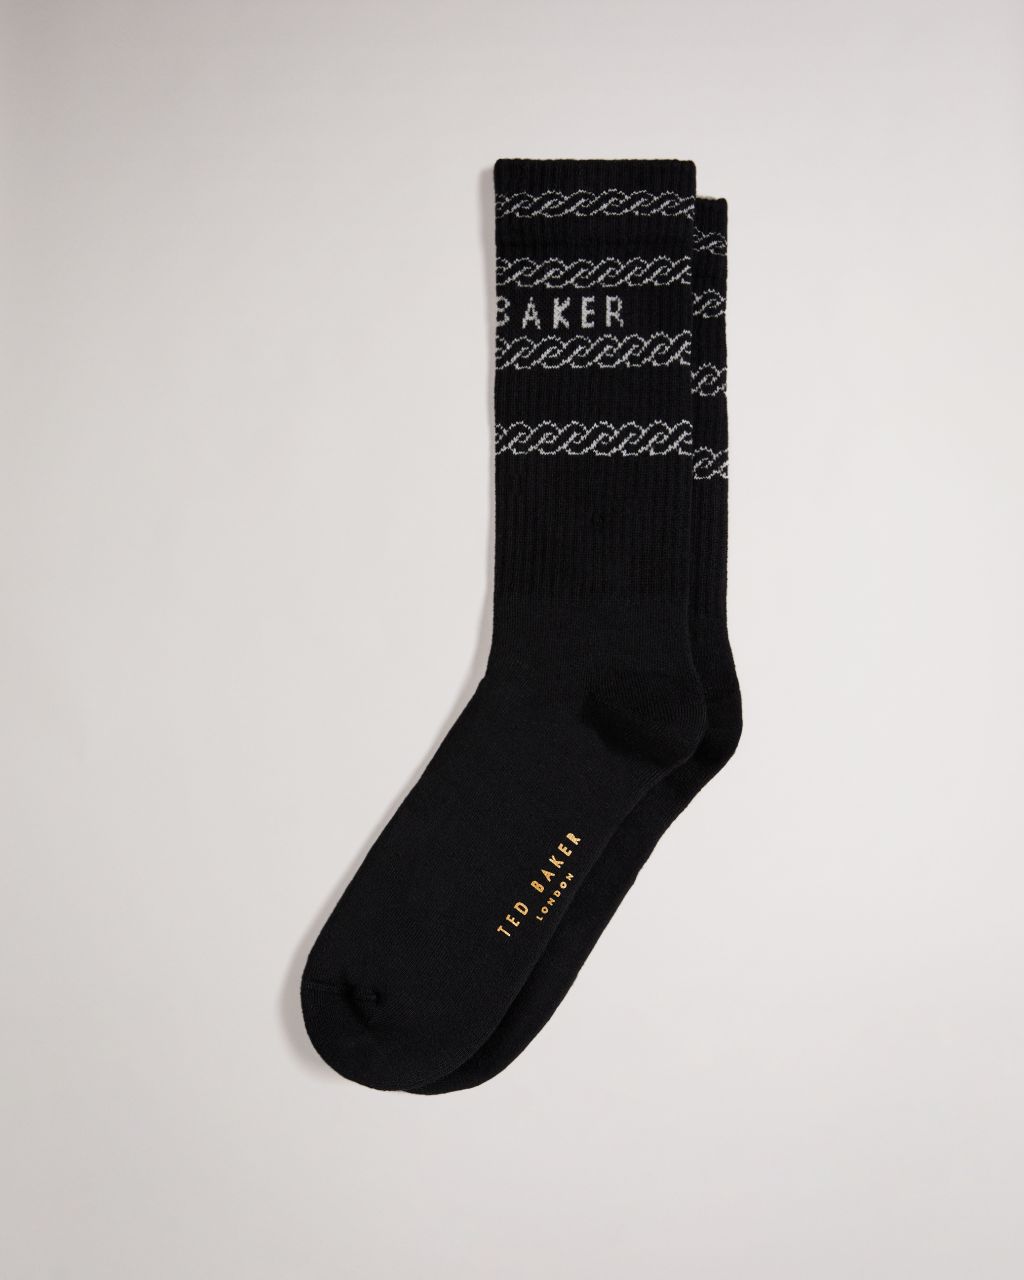 Men's Branded Chain Socks in Black, Chains product